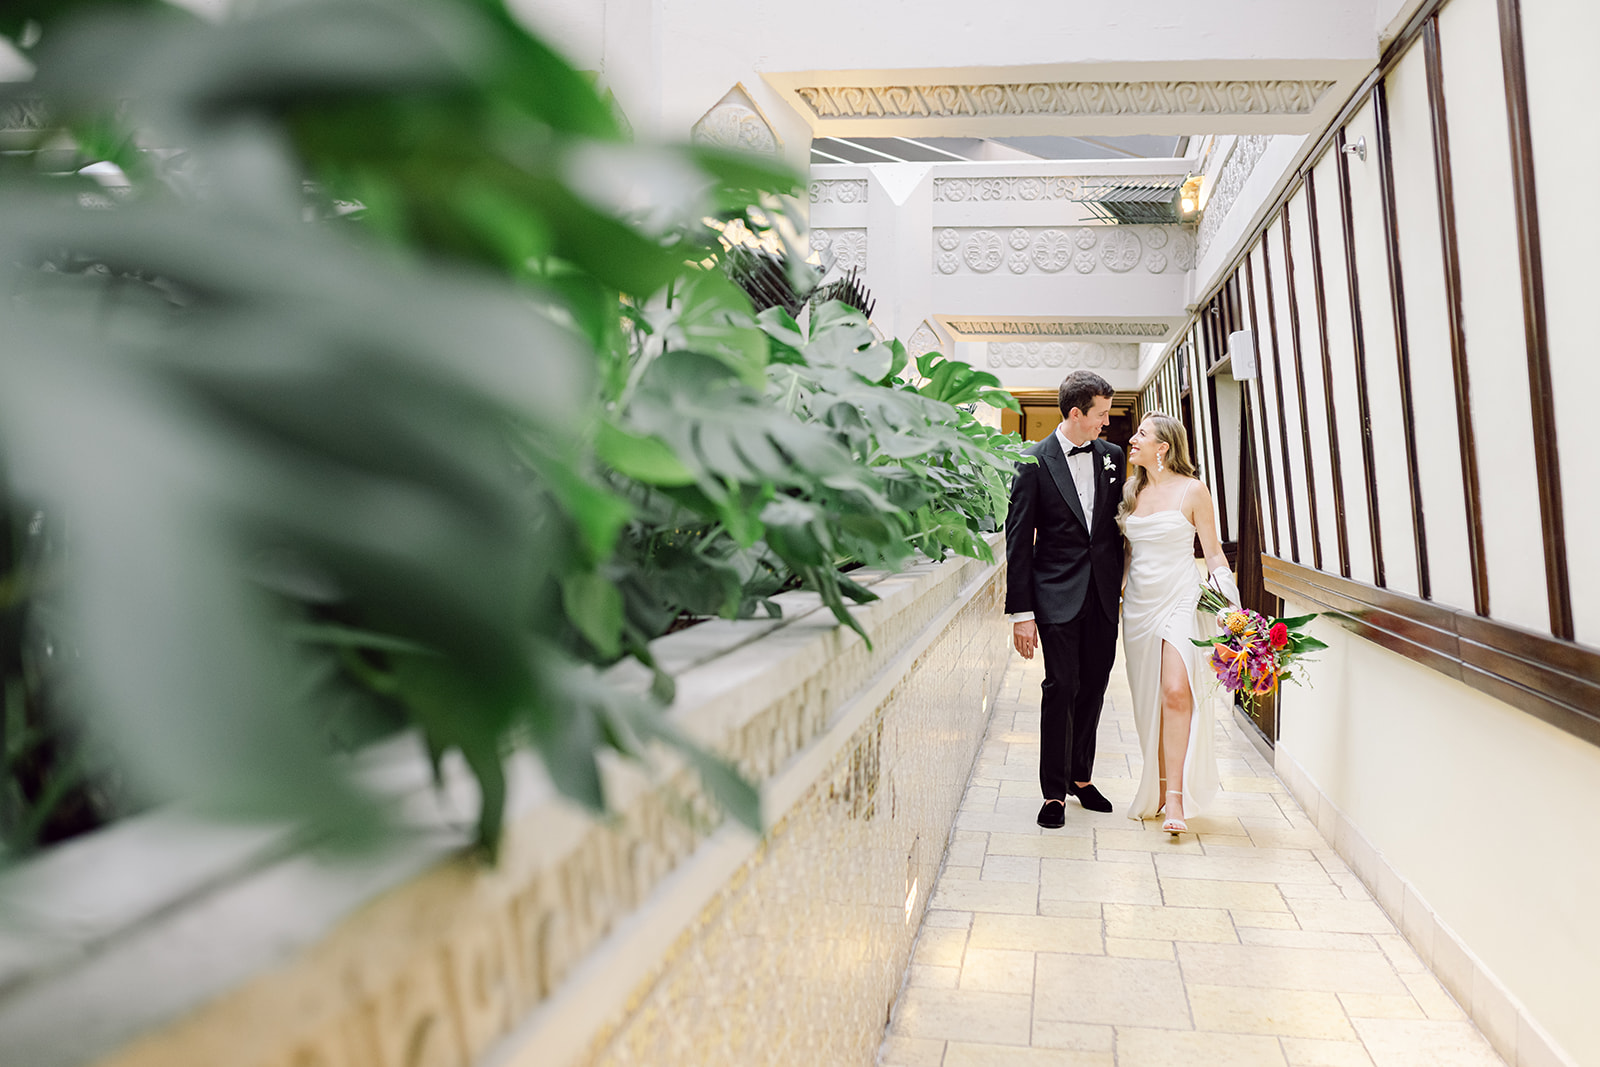 Bride & groom walking hand in hand down hallway at Mayfair House Hotel & Garden in Miami on wedding day.